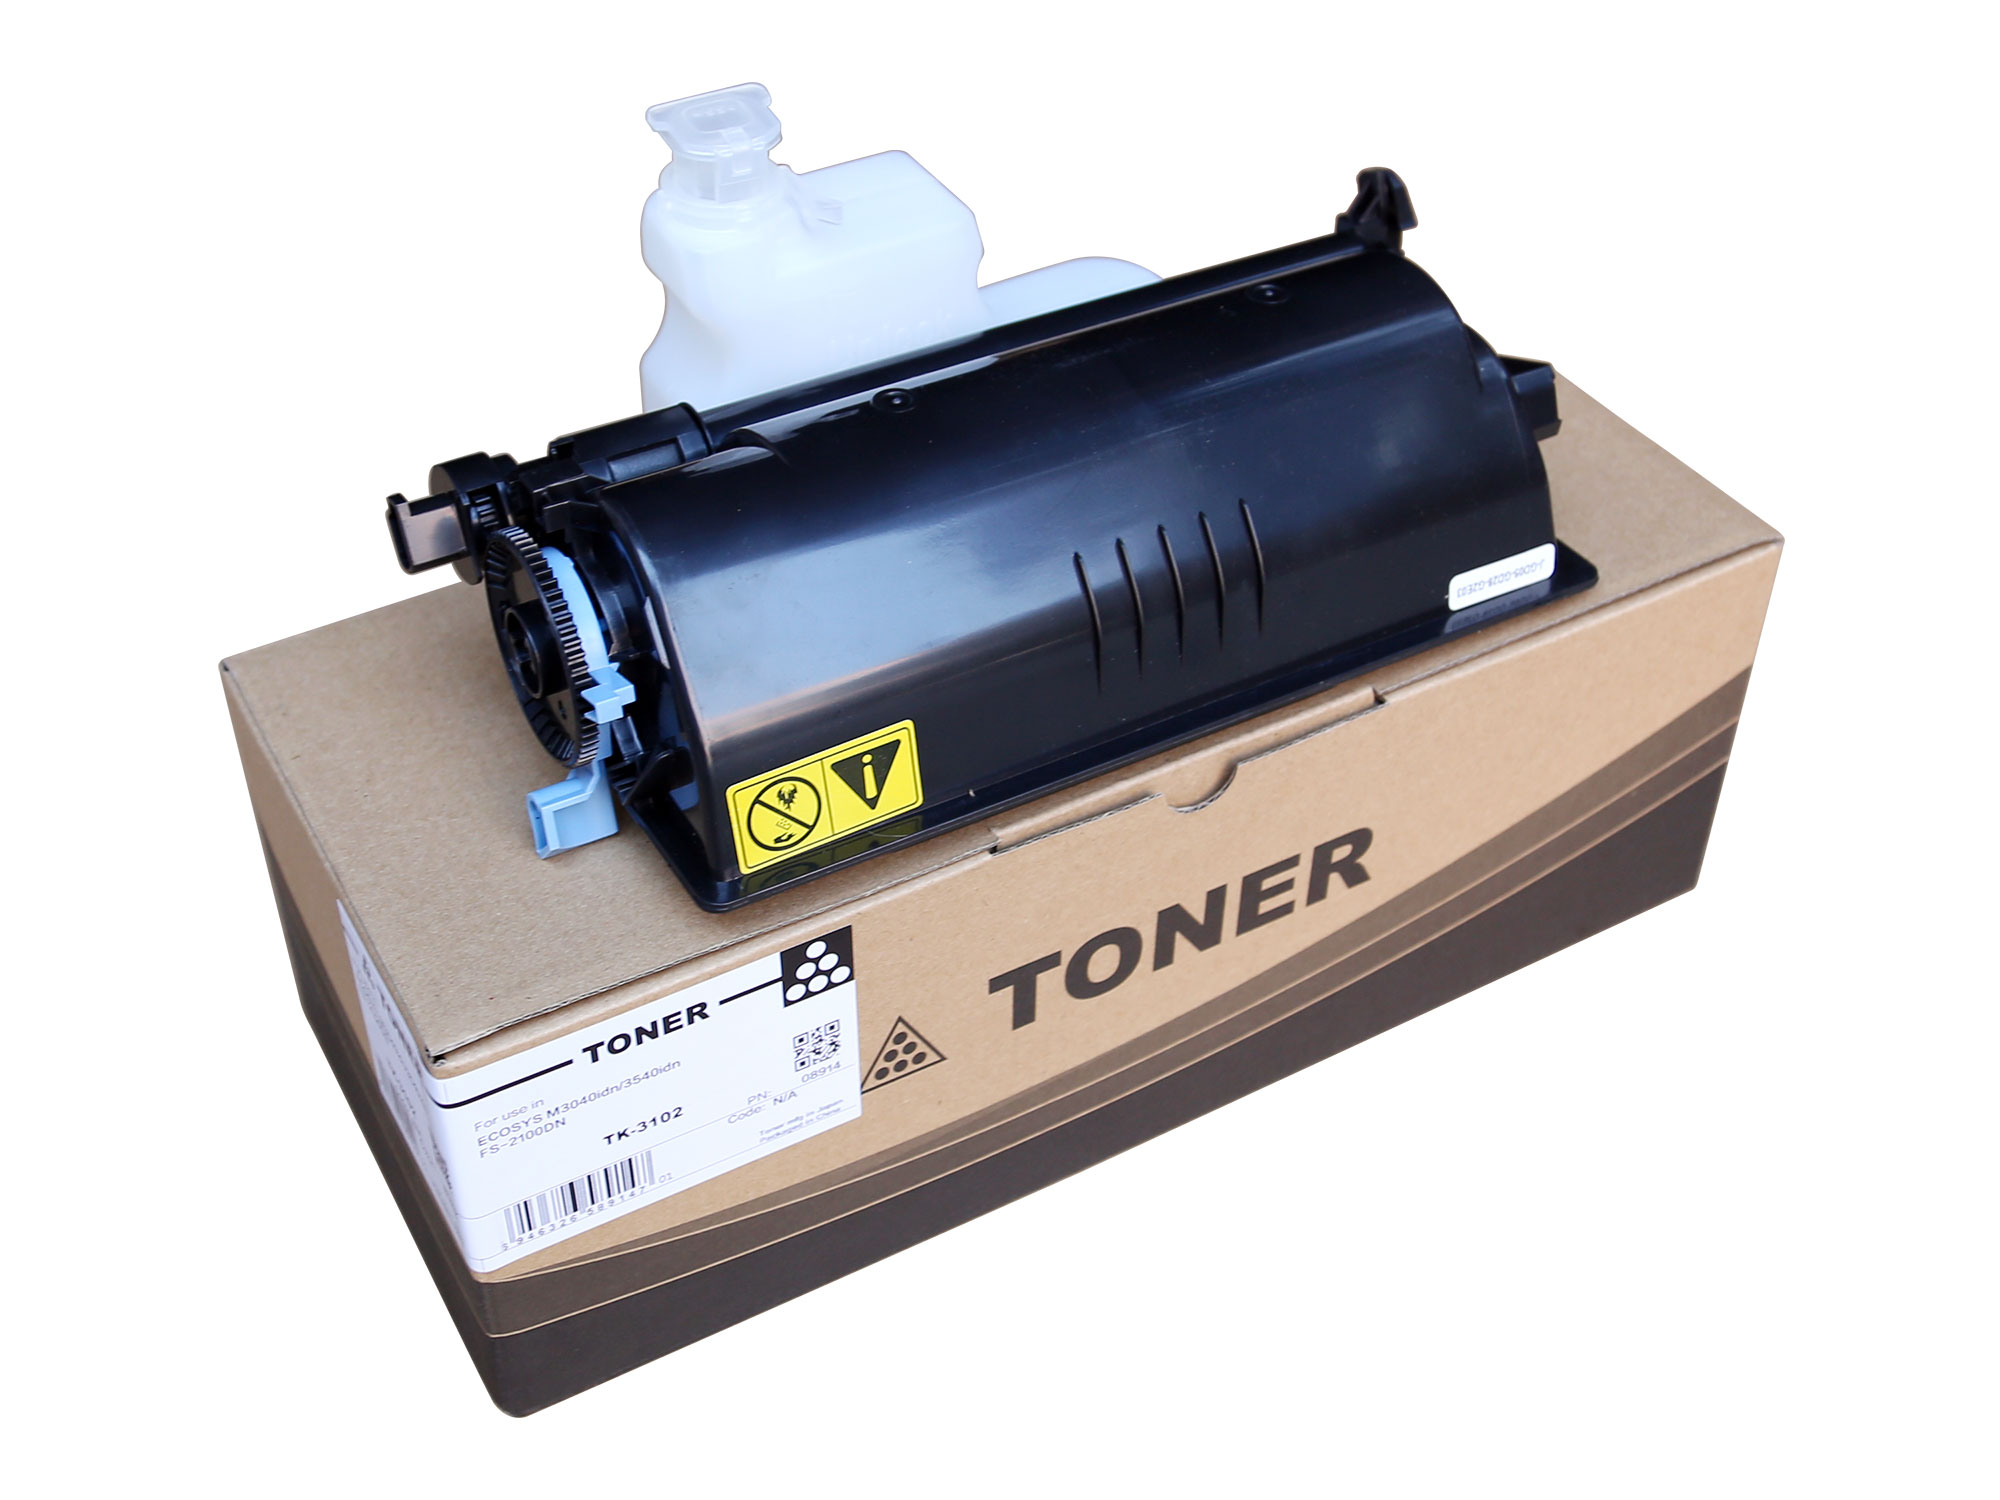 TK-3102 Toner Cartridge for Kyocera ECOSYS M3040idn